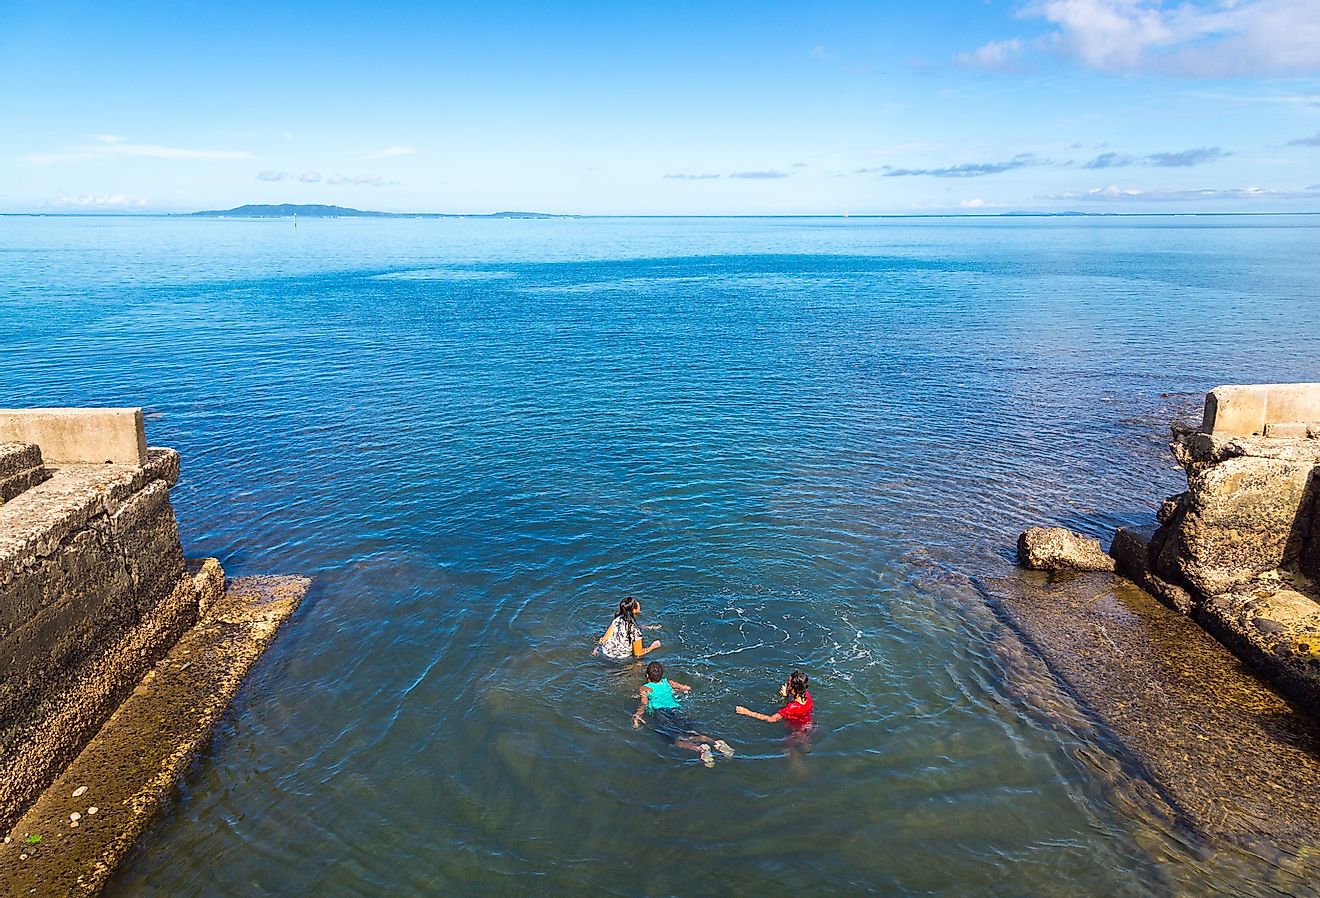 Indigenous fijian Melanesian kids are swimming off the embankment, Ovalau island, Lomaiviti archipelago, Fiji. Image credit maloff via Shutterstock